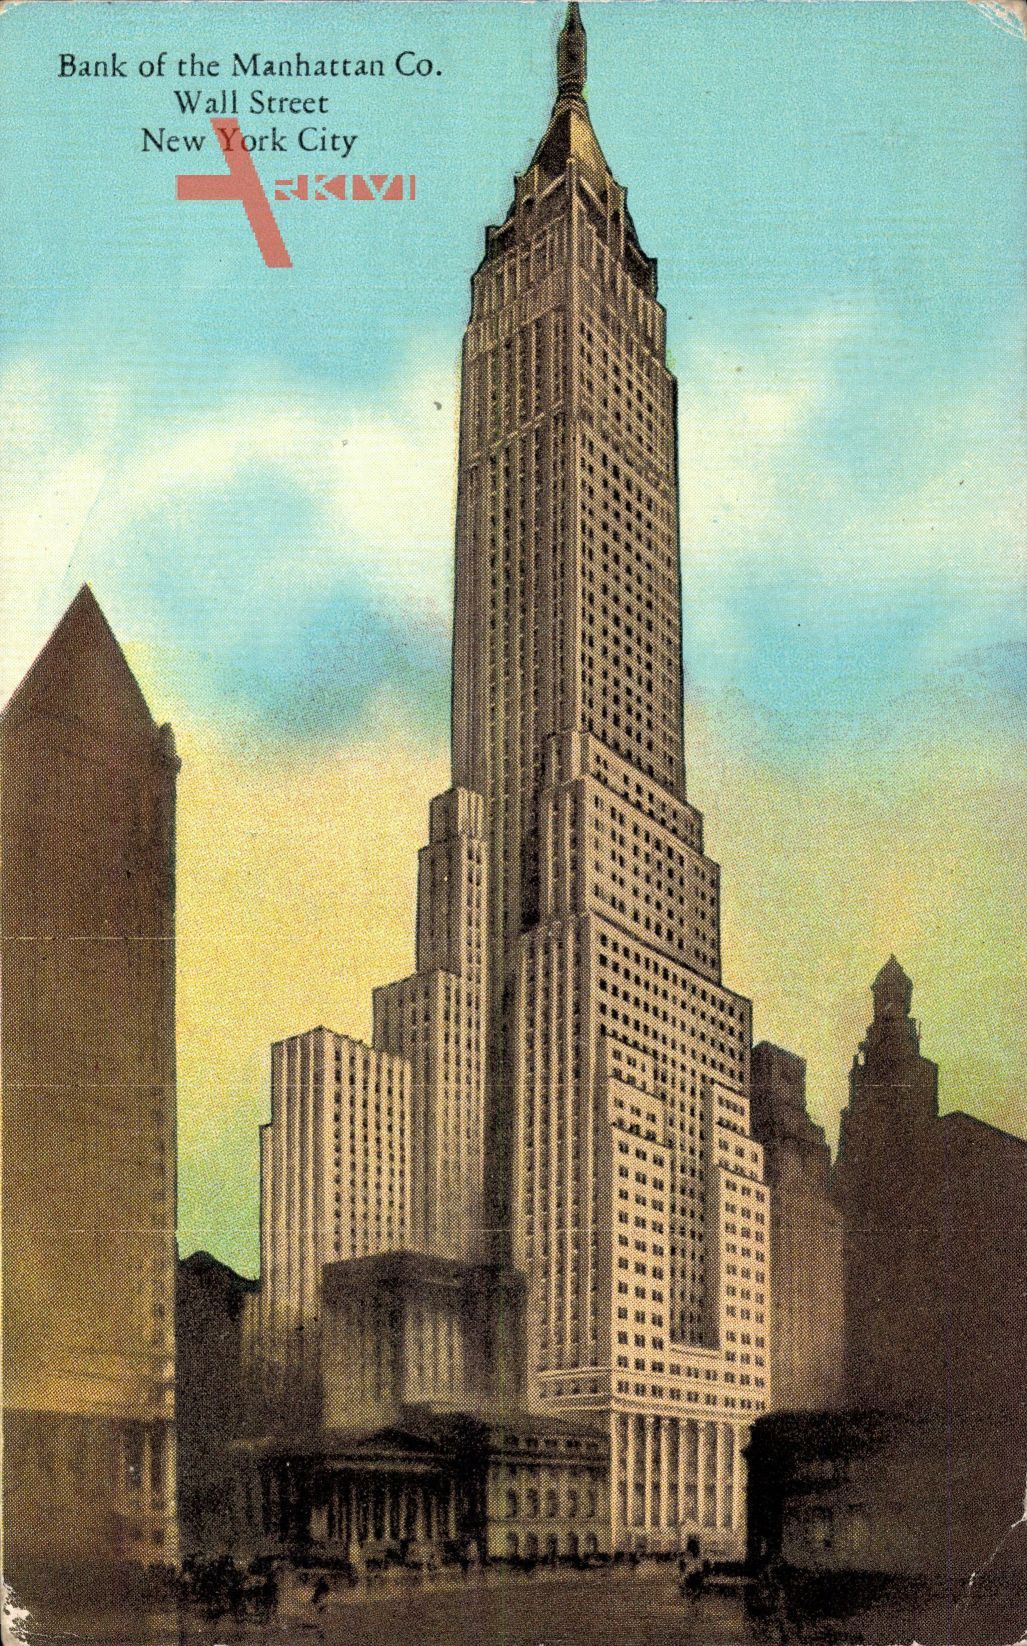 New York City, Bank of the Manhattan Co., Wall Street